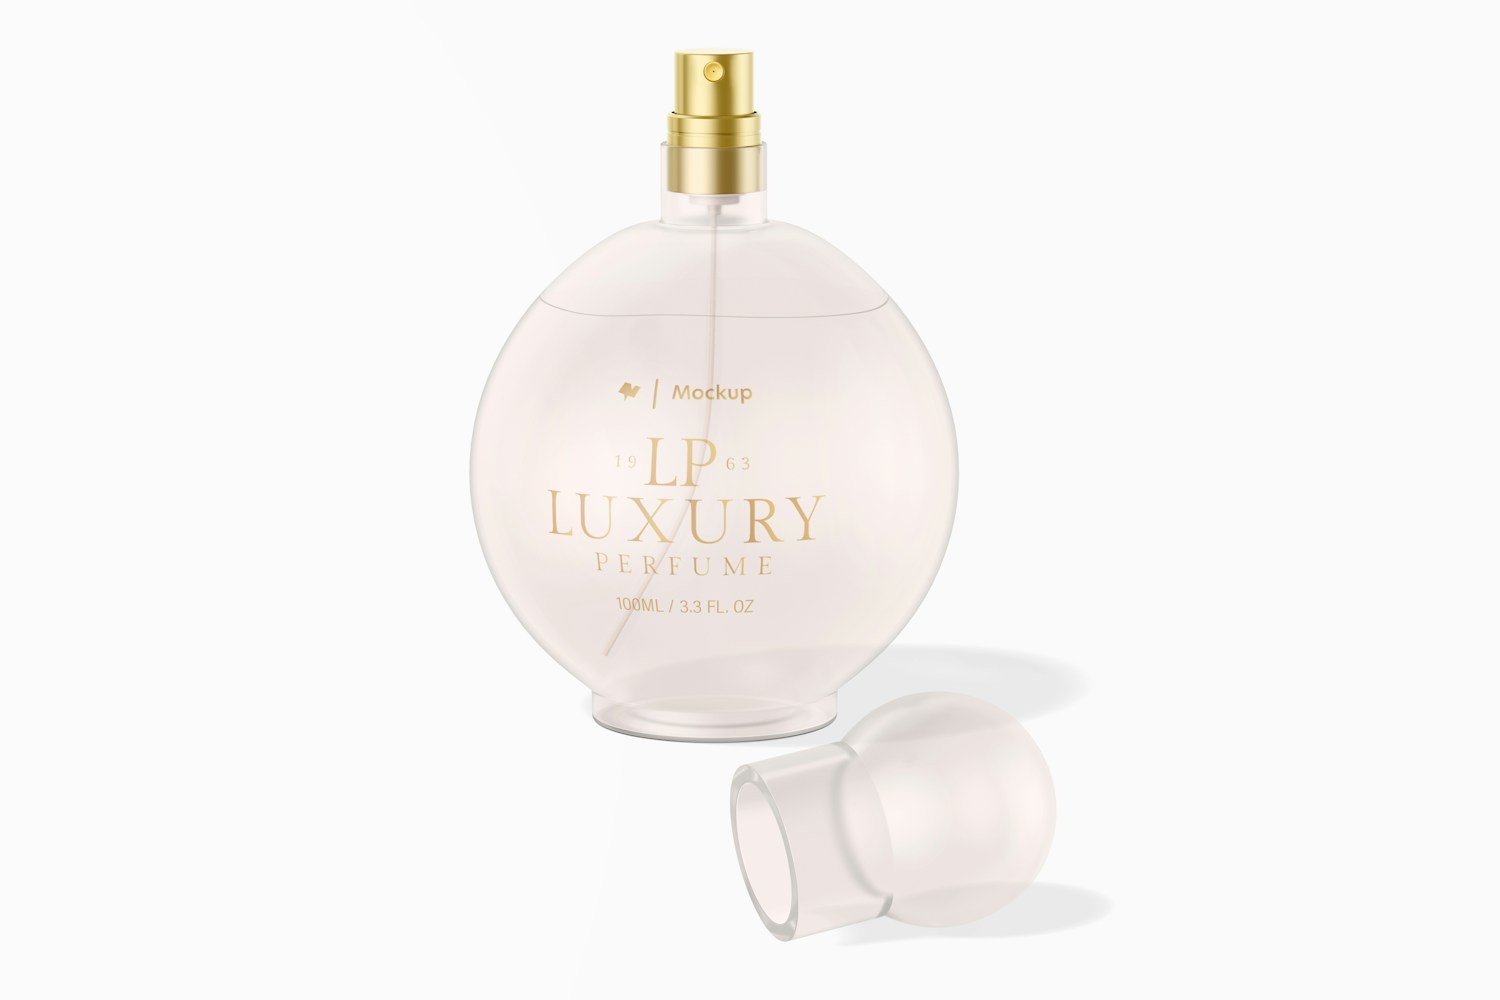 Stubby Luxury Perfume Bottle Mockup, Front View